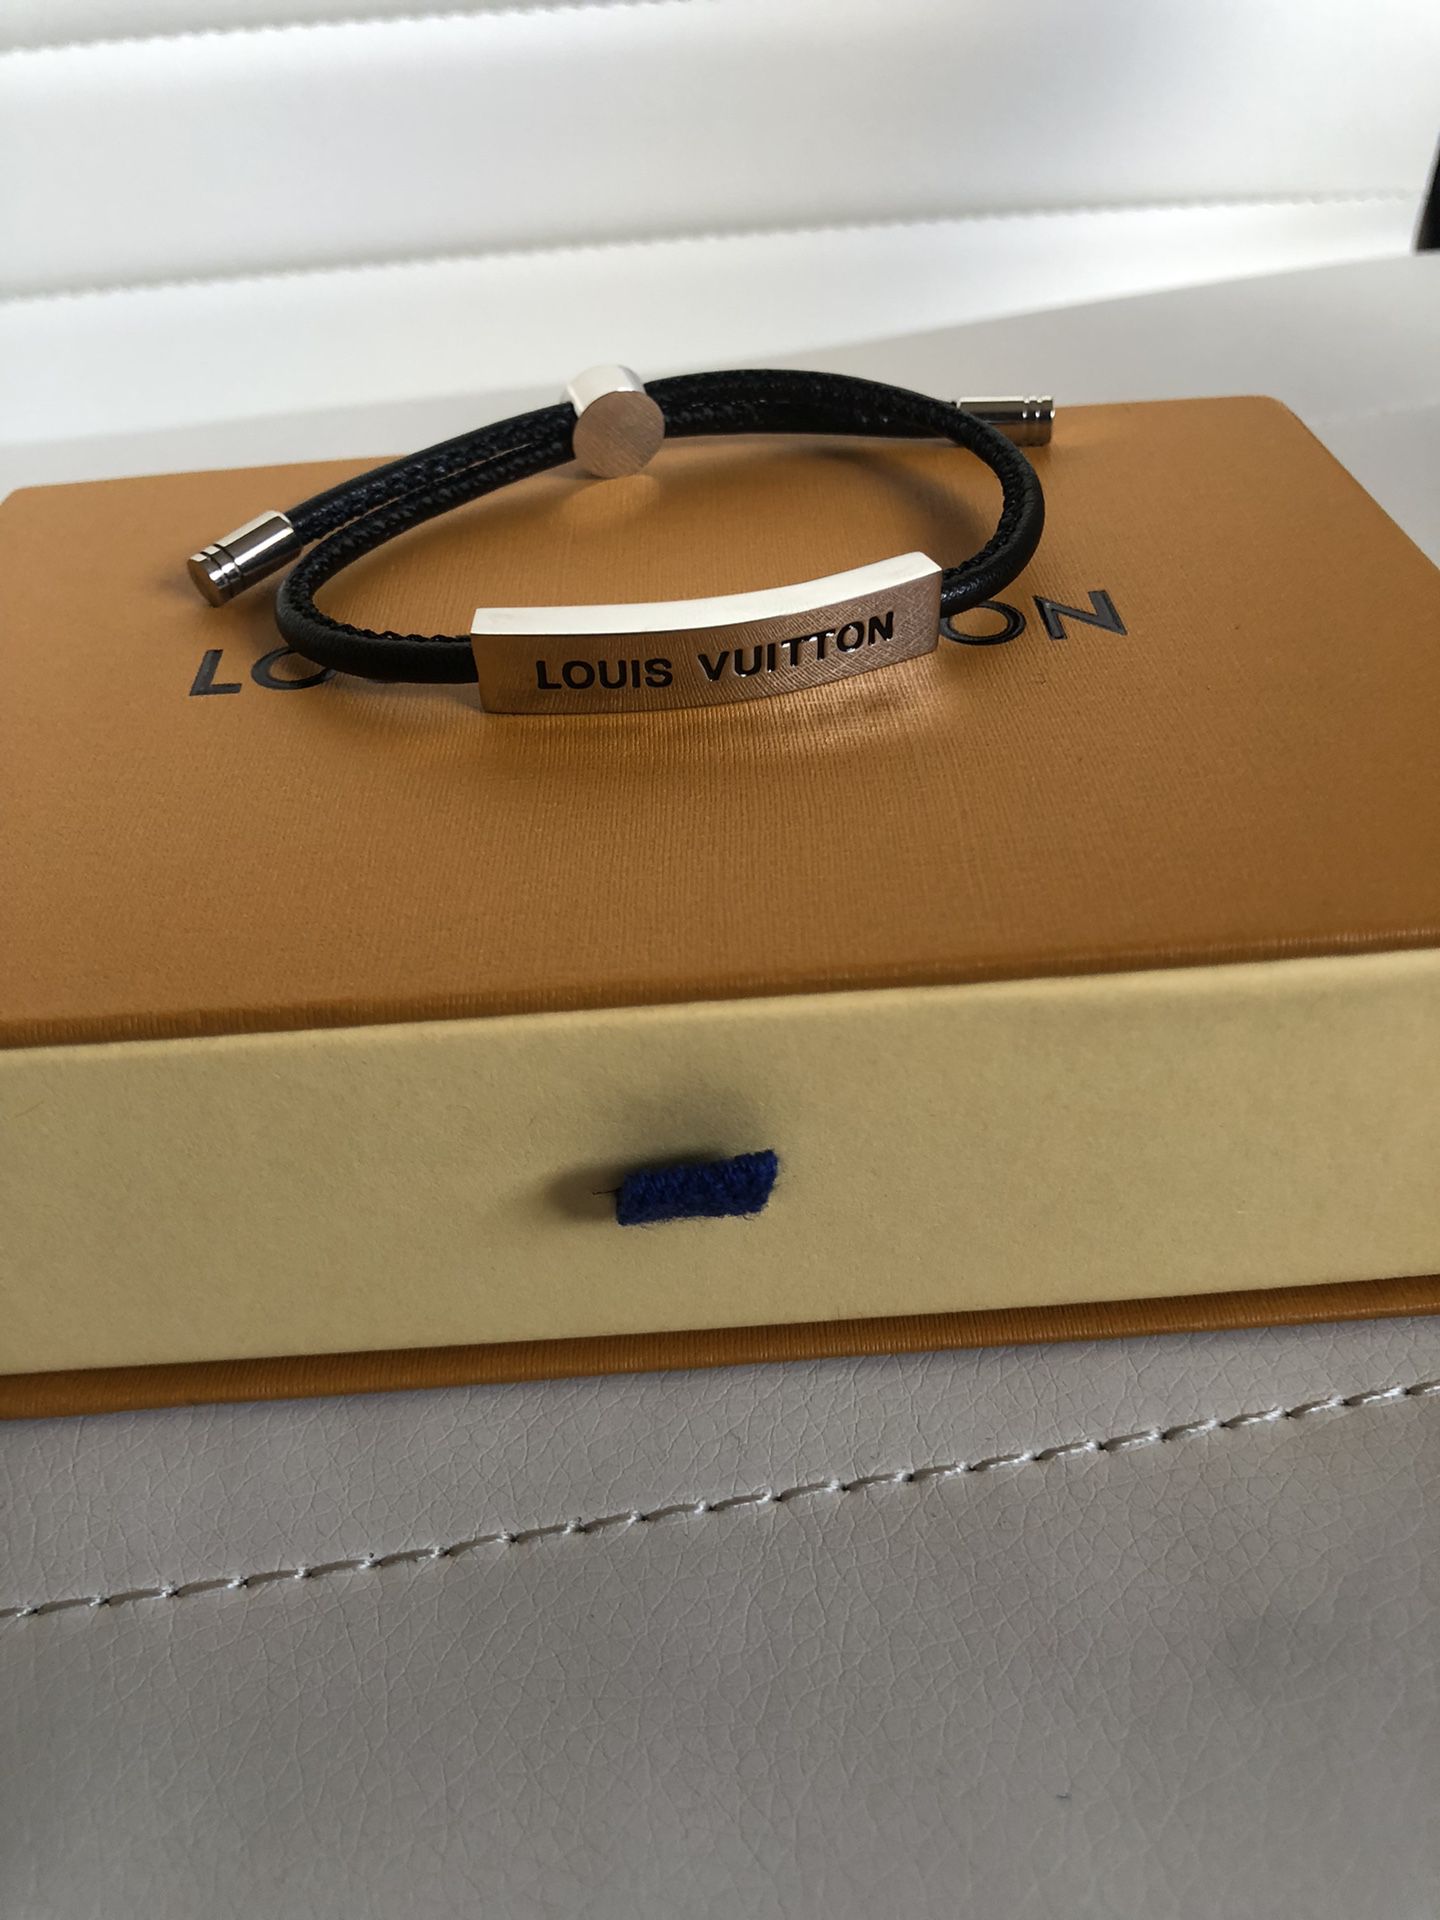 Louis Vuitton Bracelet for Sale in San Jose, CA - OfferUp